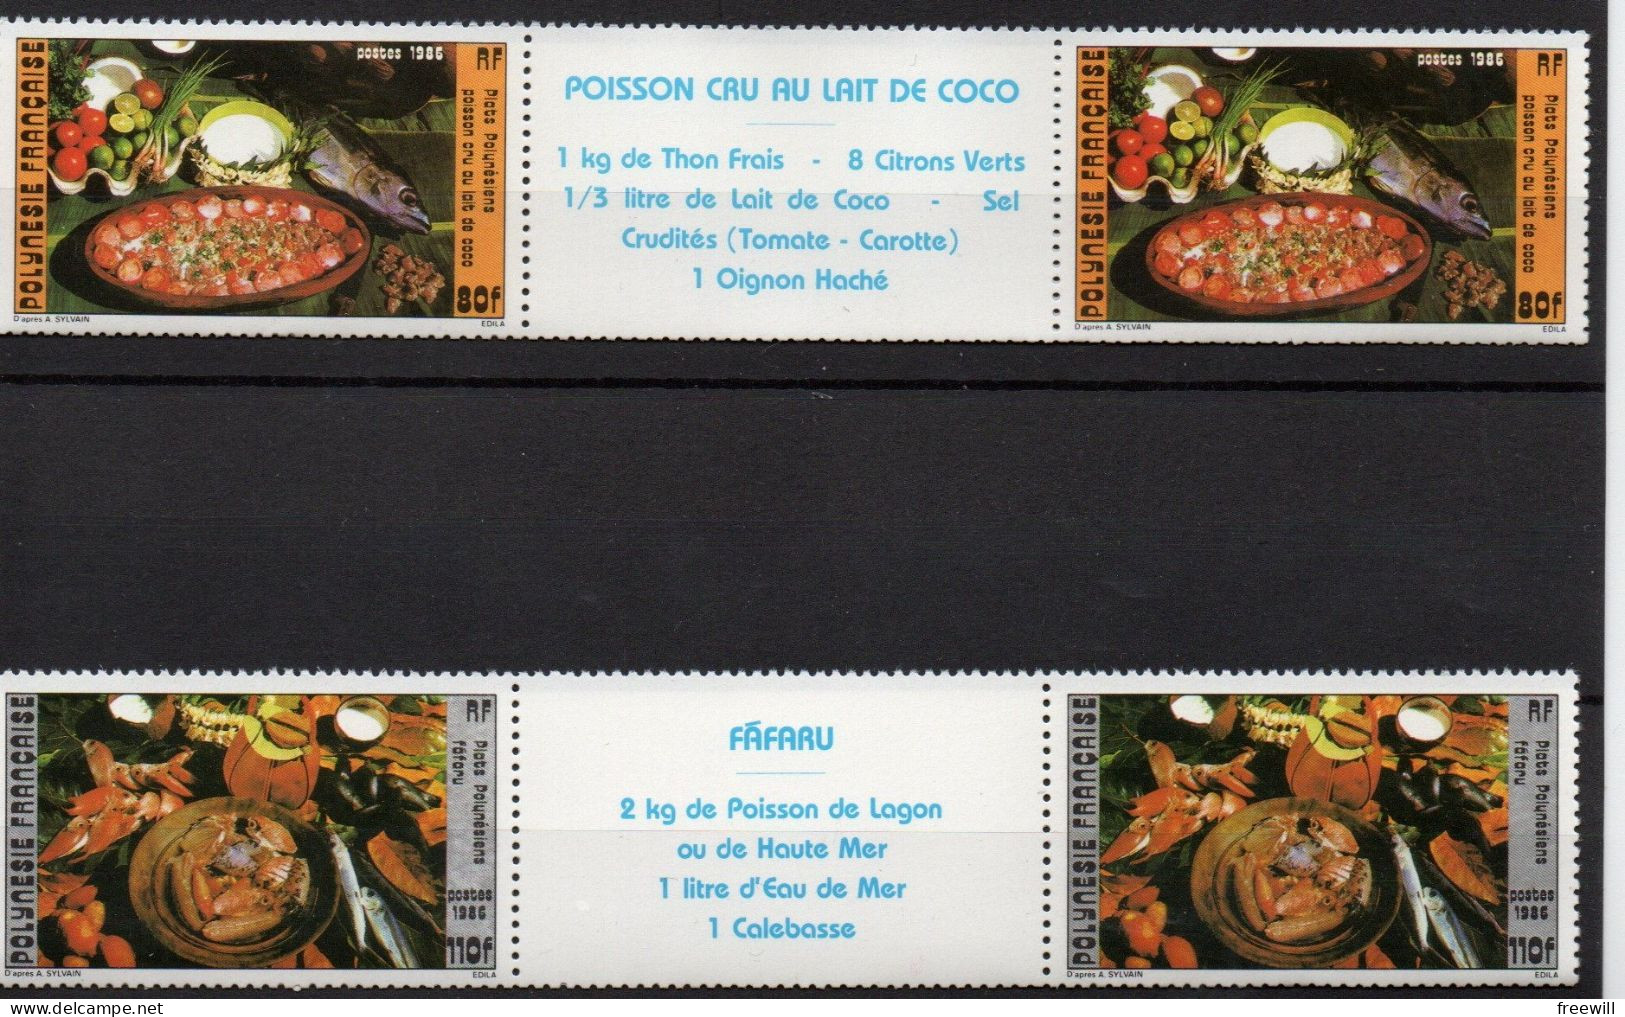 Polynésie française   Timbres divers - Various stamps -Verschillende postzegels XXX